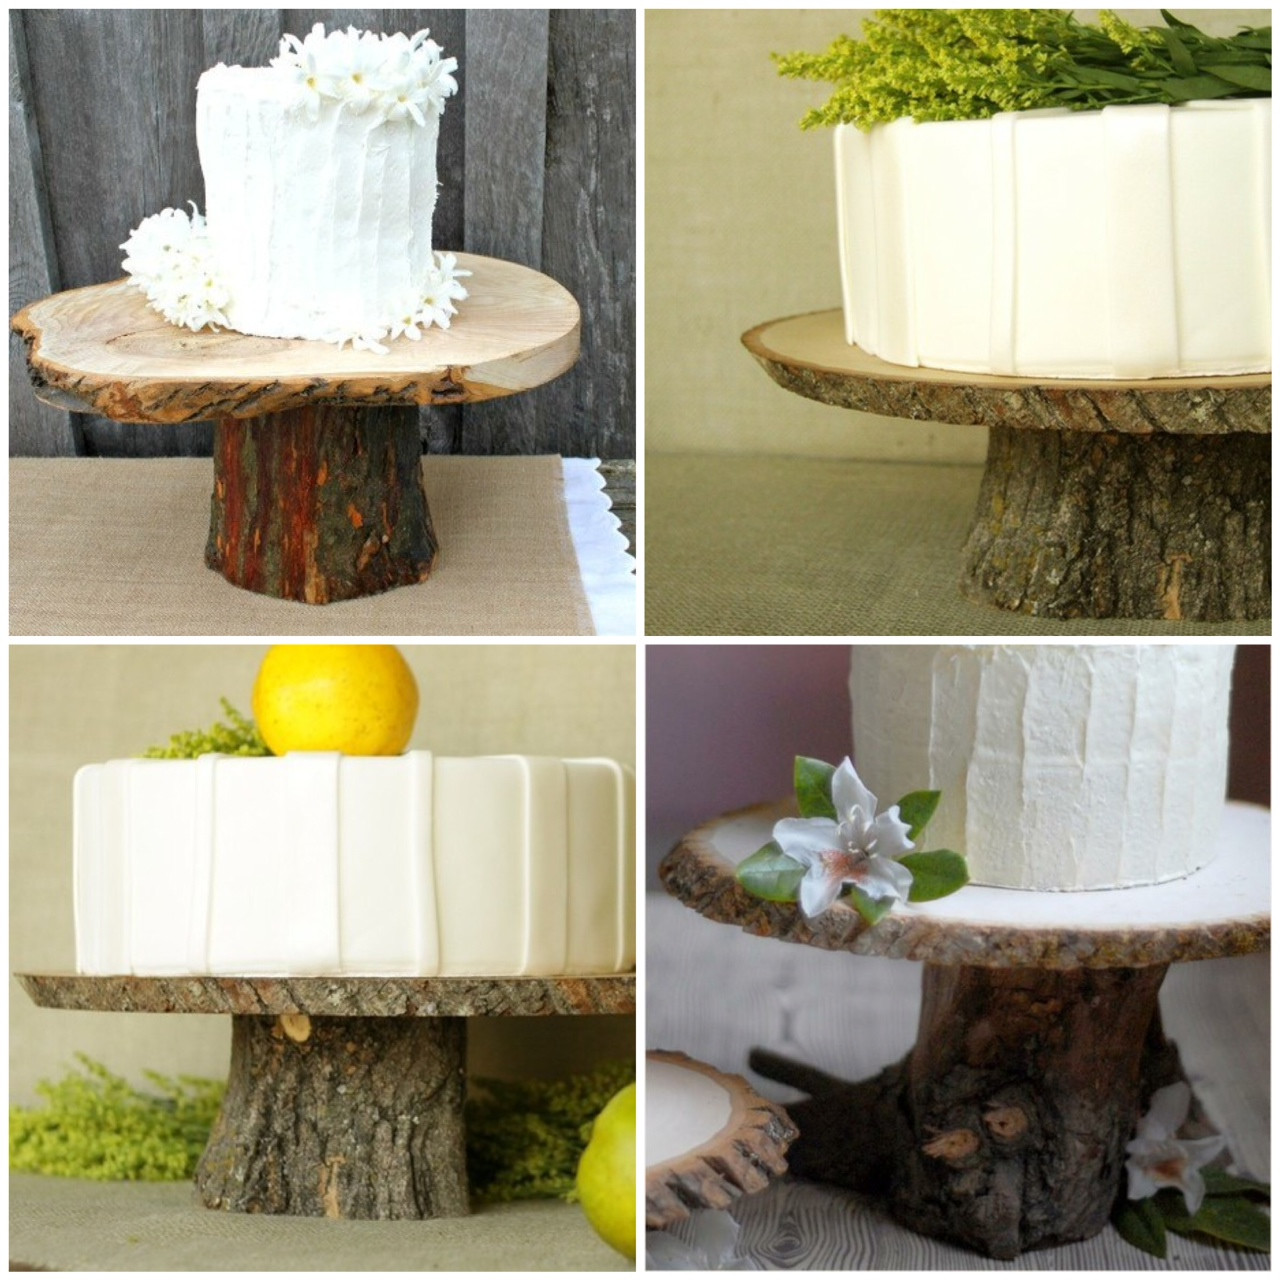 Wood Cake Stand DIY
 Rustic Wood Cake Stands a DIY